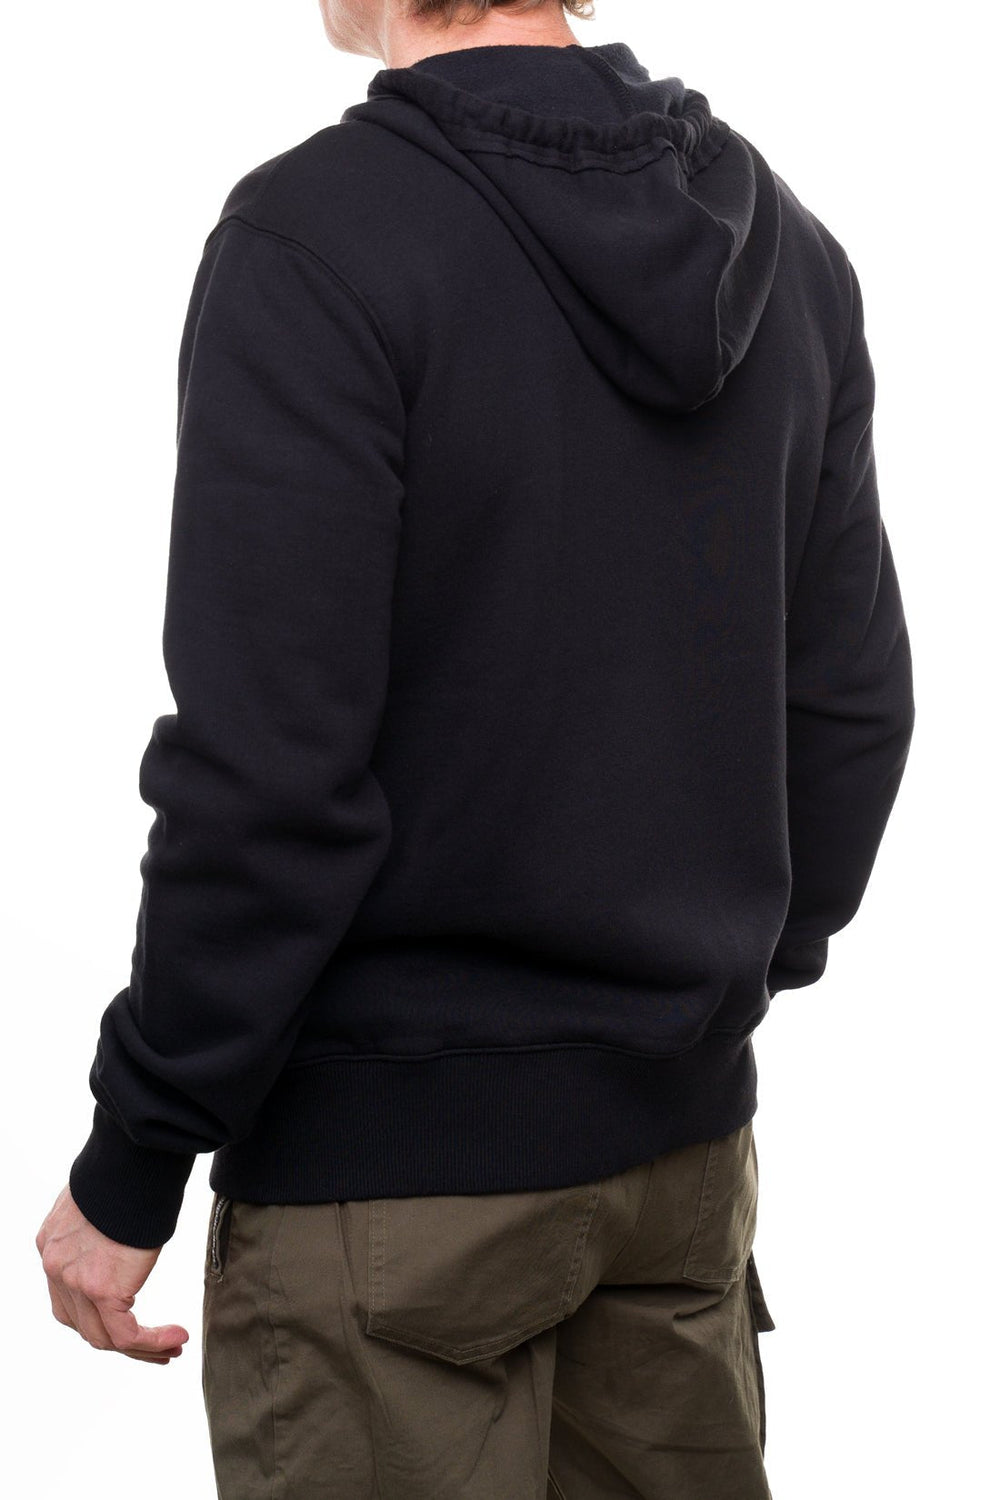 men's black zip hoodie